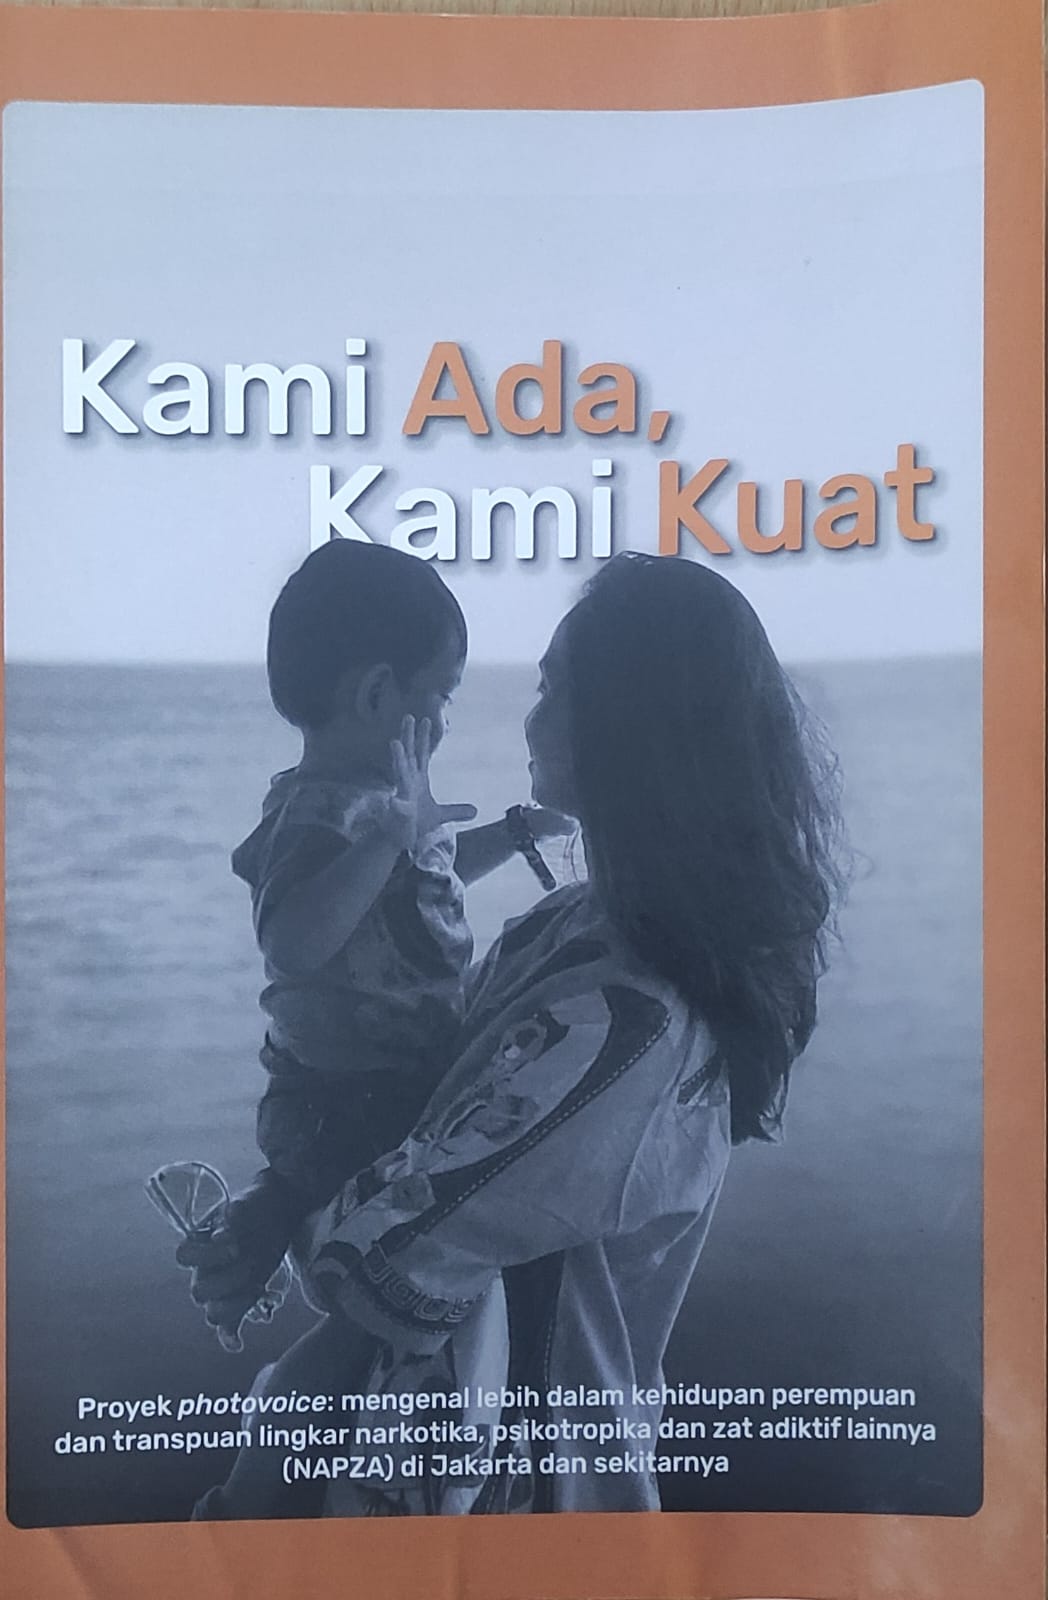 Kami Ada, Kami Kuat, Proyek Photovoice: Mengenal Lebih Dalam Kehidupan Perempuan dan Transpuan Lingkar Narkotika, Psikotropika dan Zat Adiktif Lainnya (NAPZA) di Jakarta dan Sekitarnya